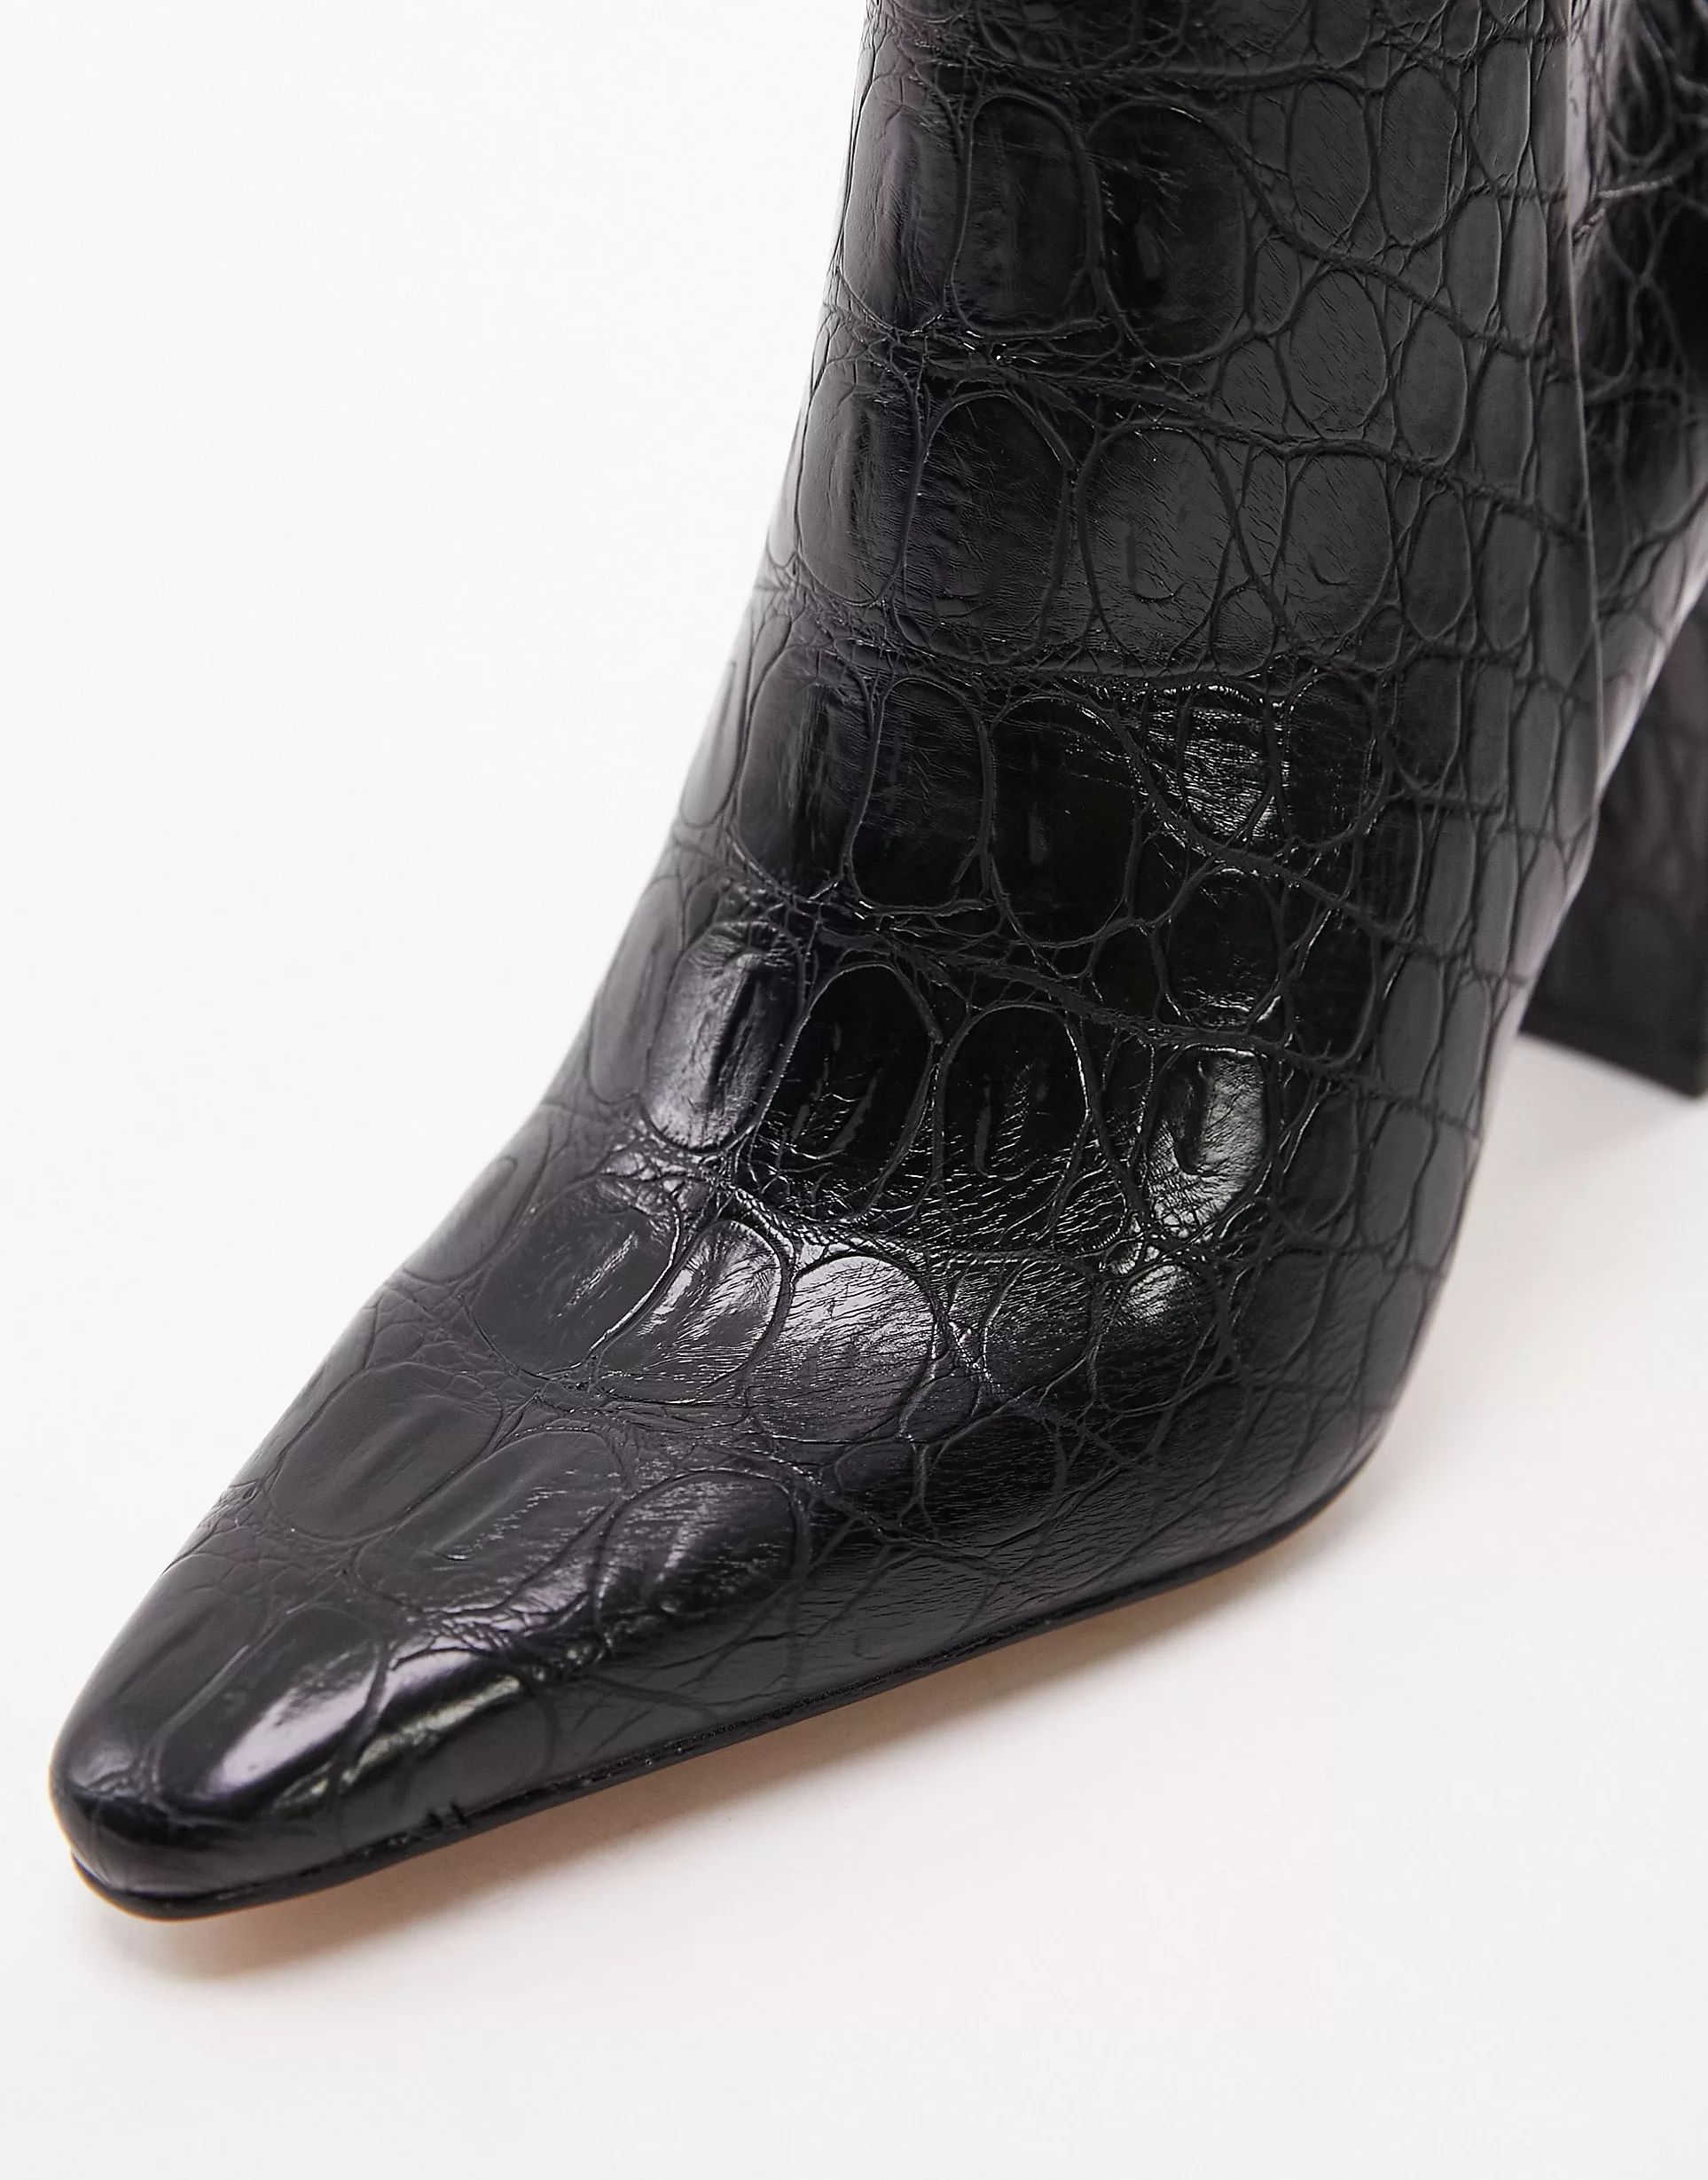 Topshop Ophelia pointed high heel ankle boot in black croc | ASOS (Global)